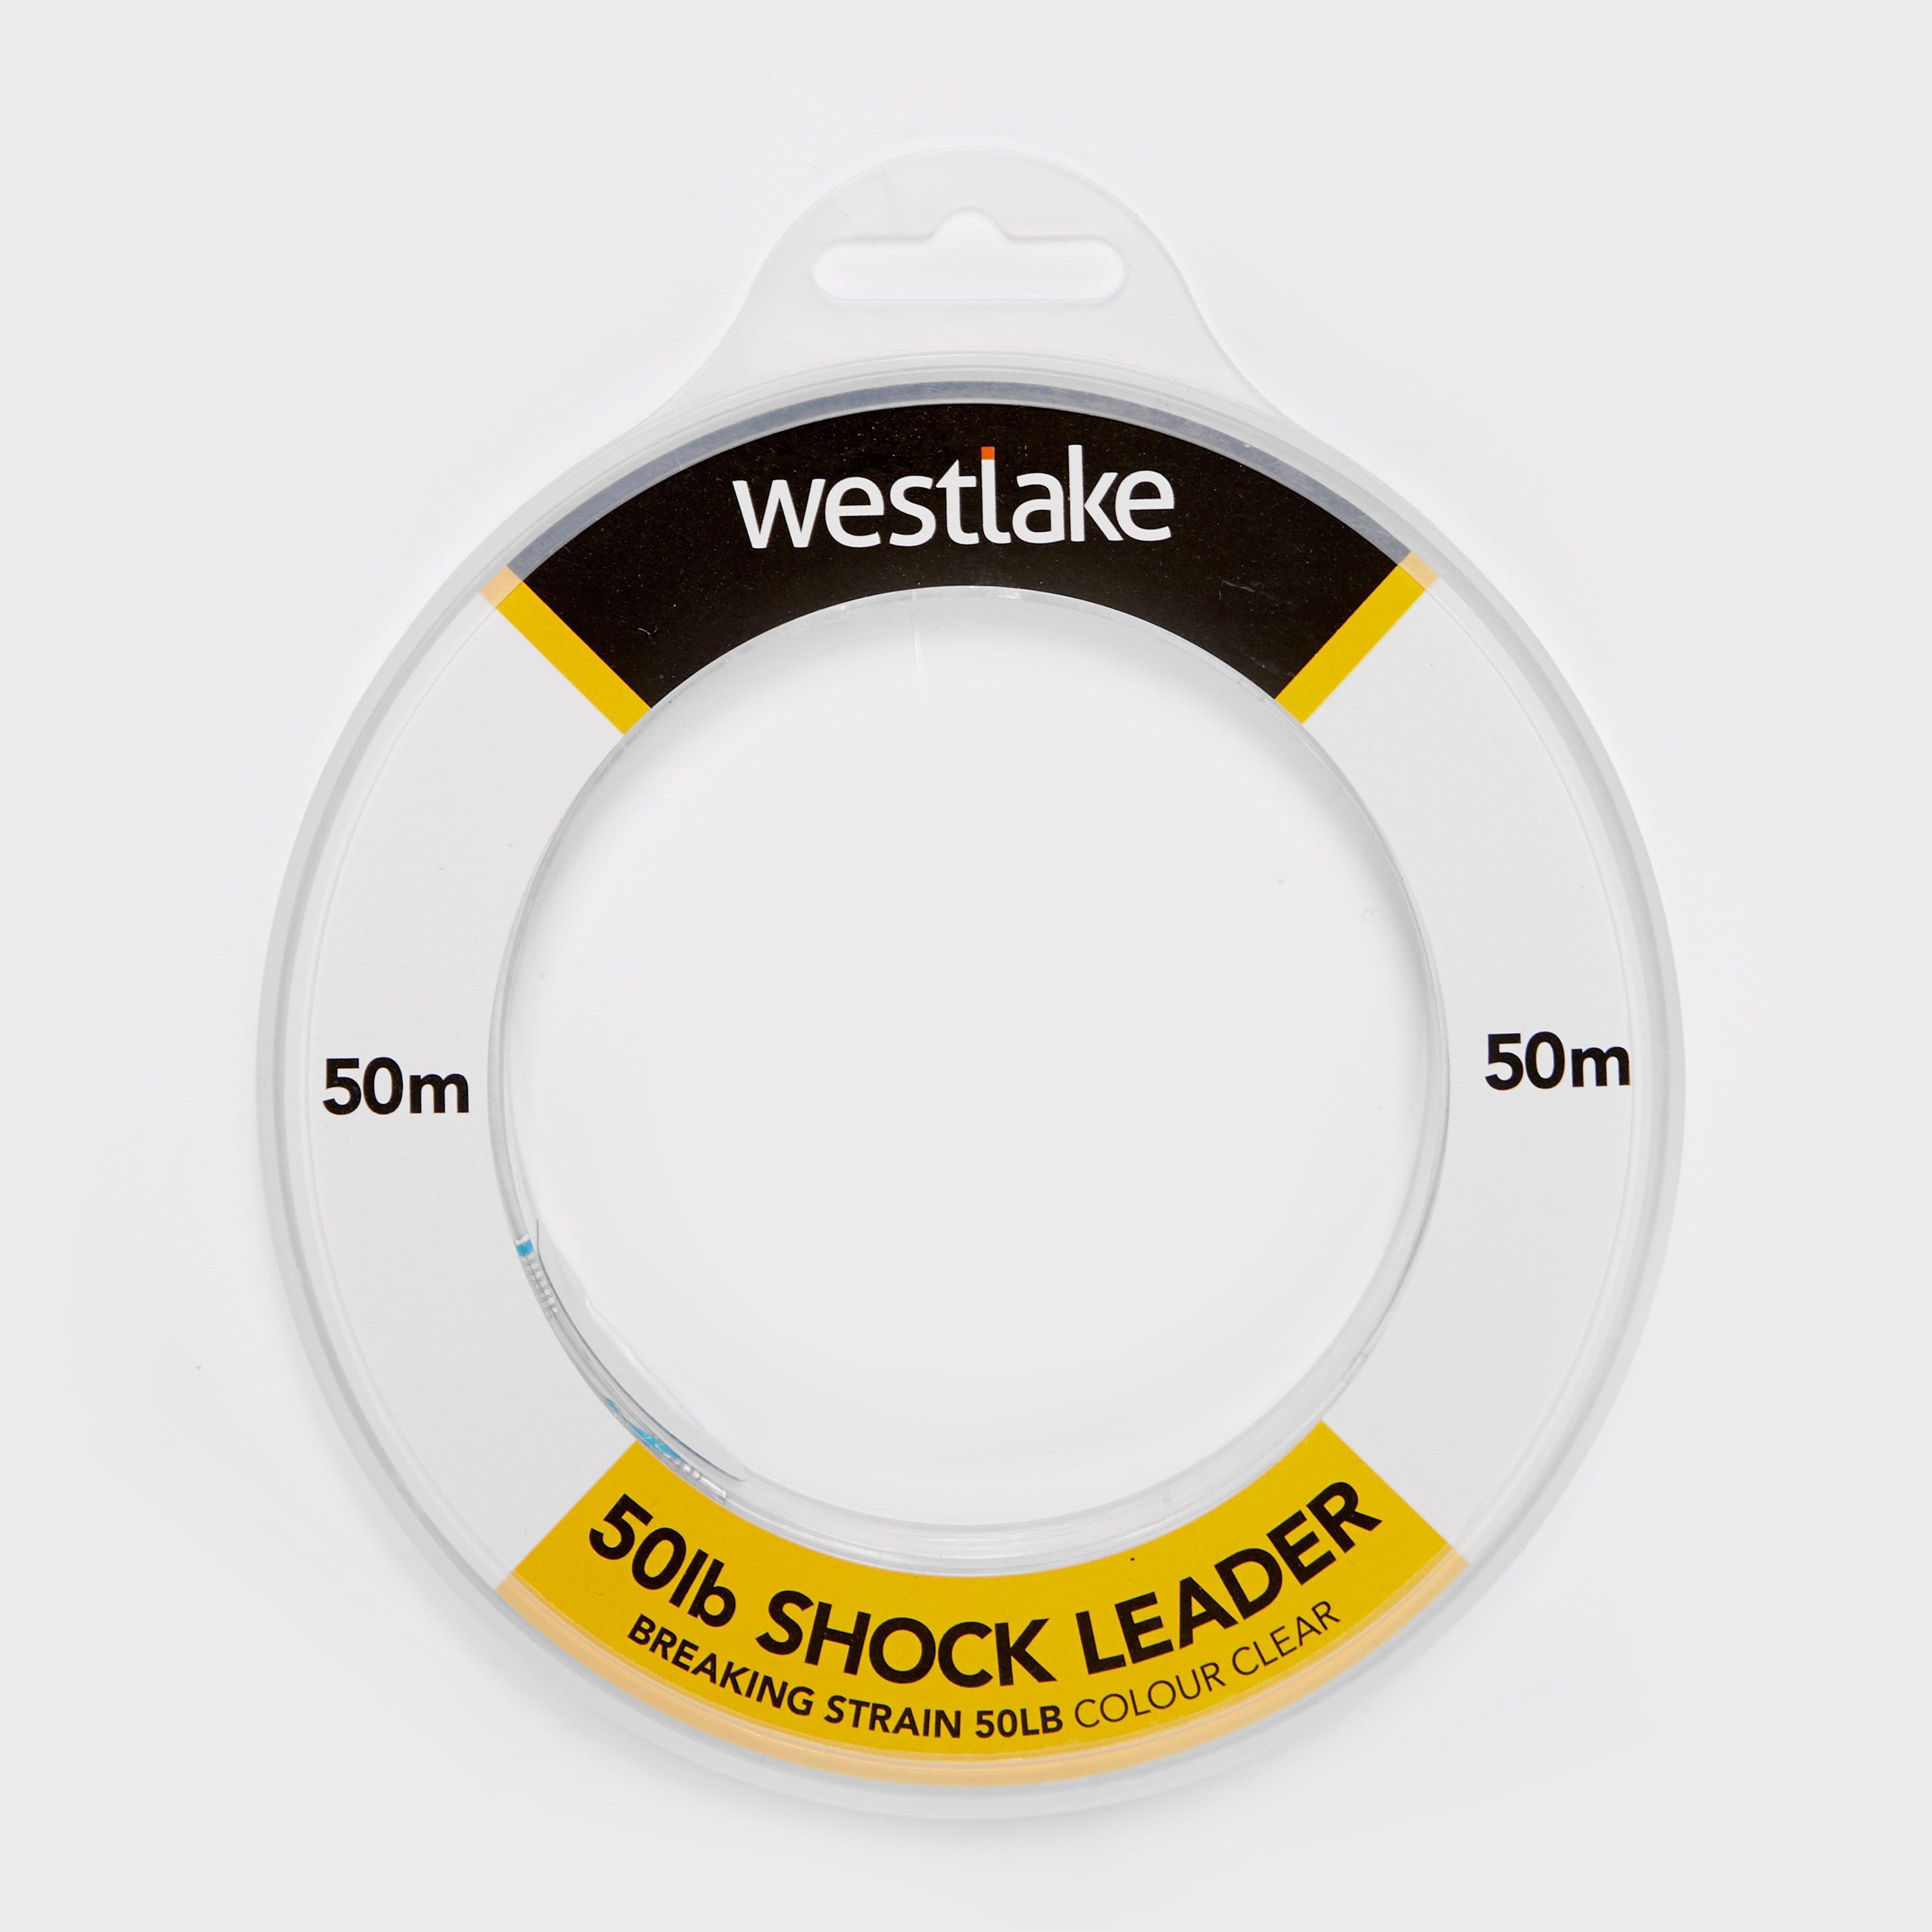 Photos - Other for Fishing West Lake Westlake Shock Leader 50M 50Lb, White 